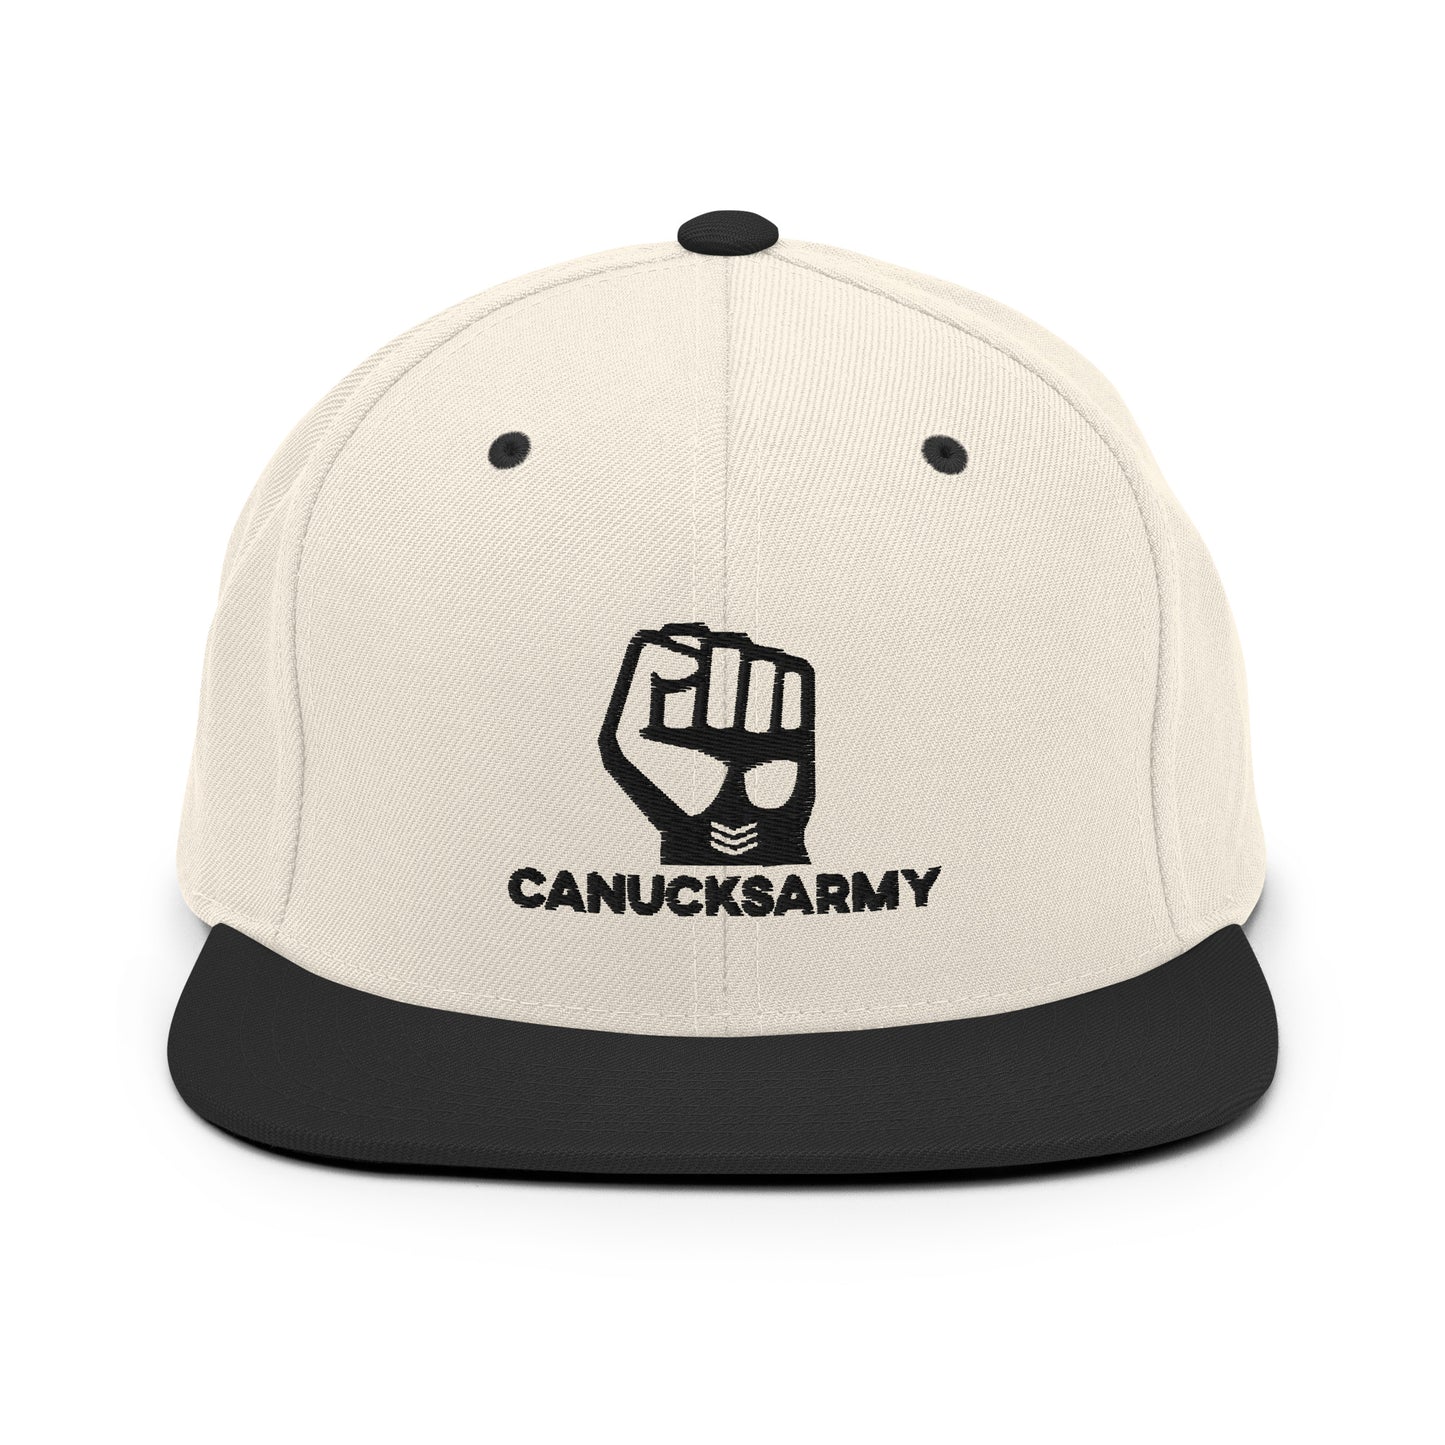 THE CLASSICS - Canucksarmy Snapback Hat